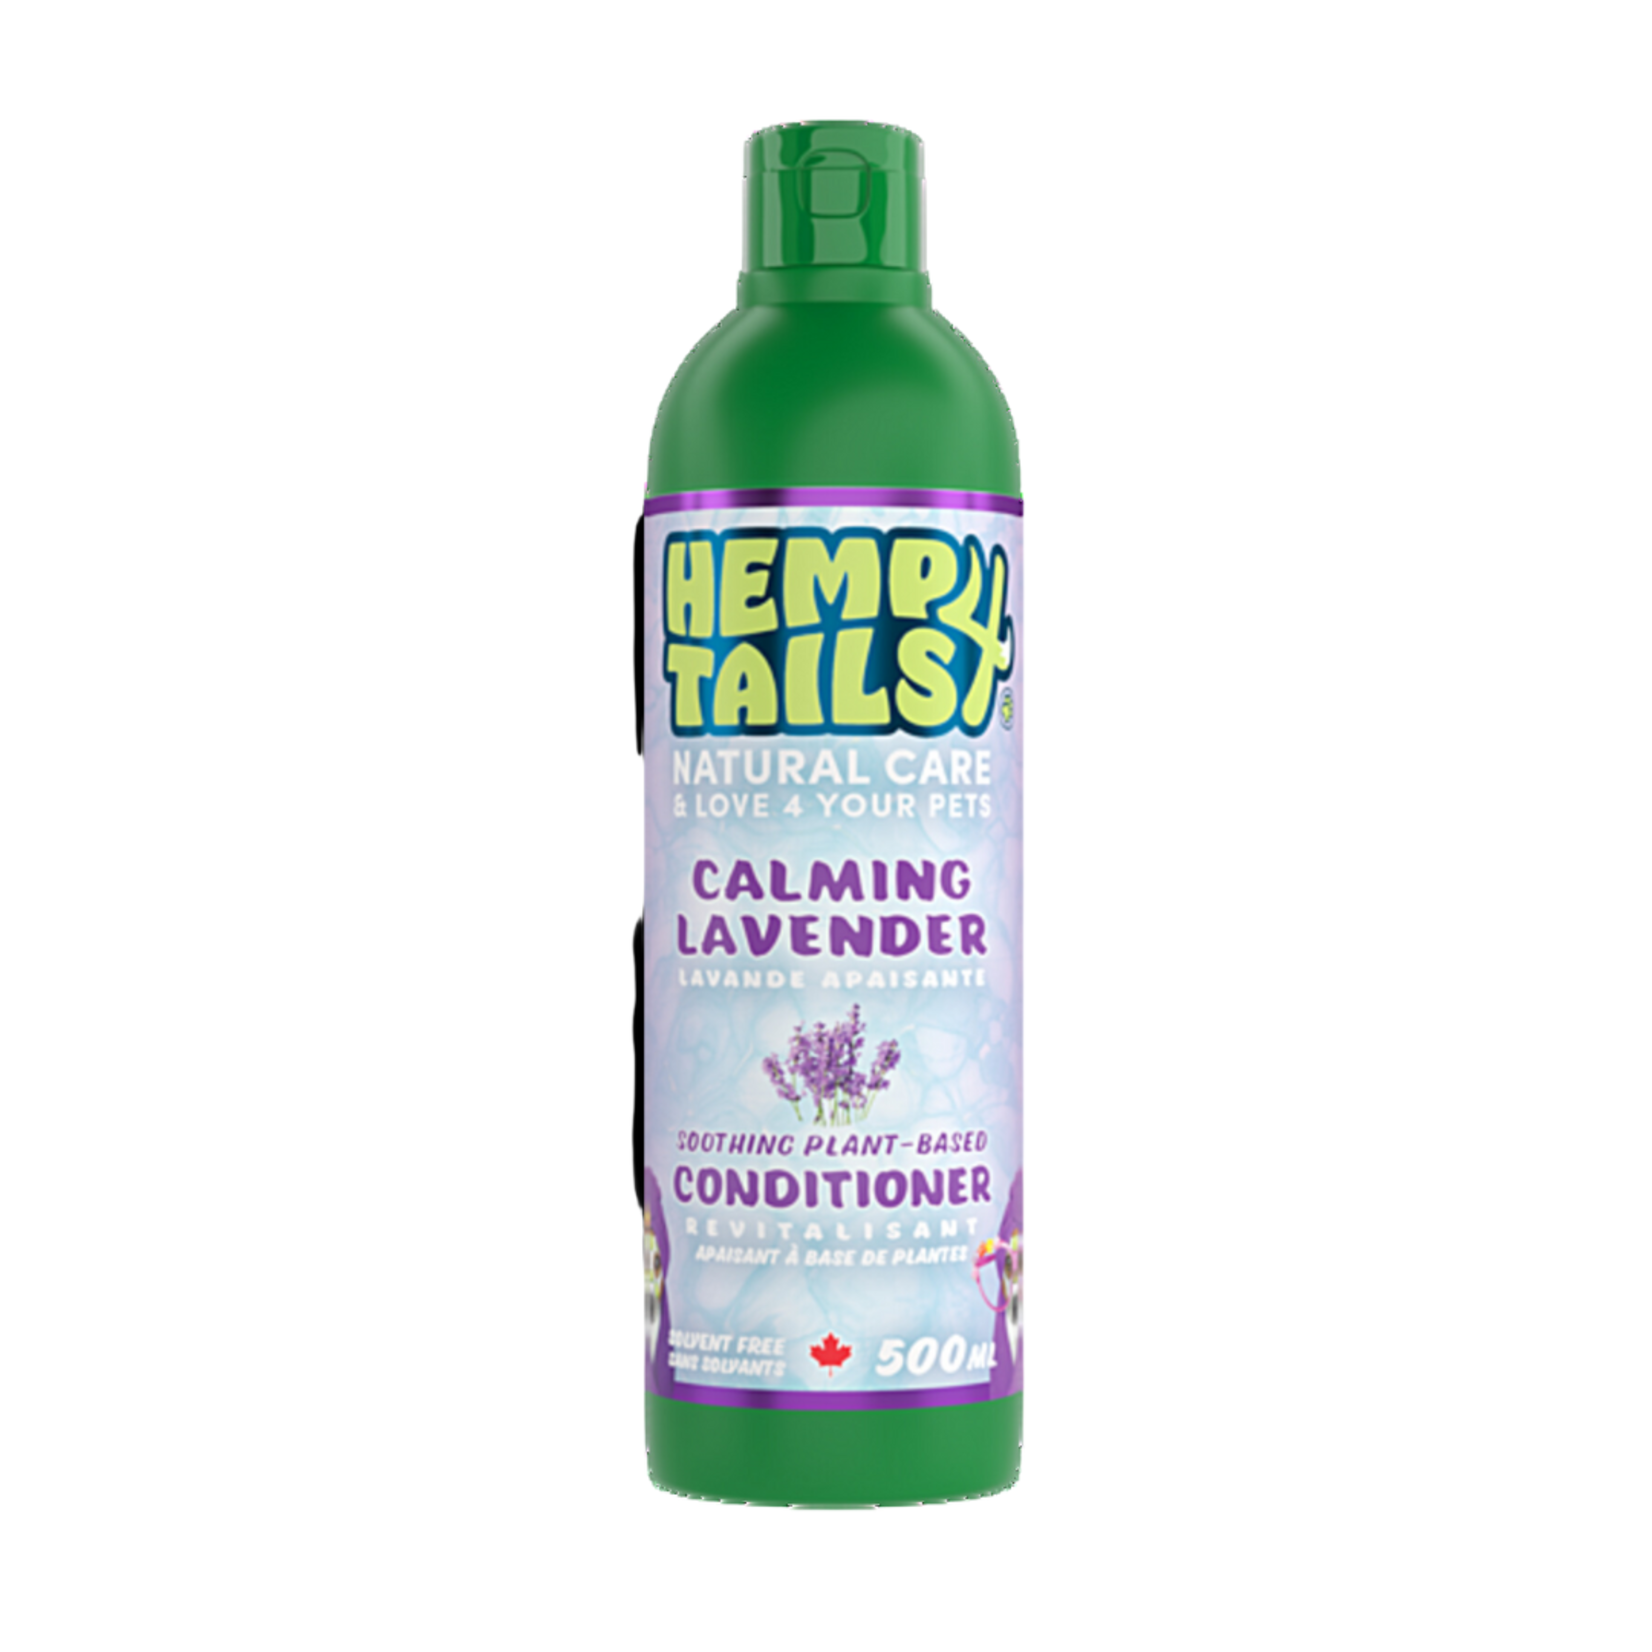 Hemp 4 Tails Natural Care Calming Lavender Conditioner 500ml